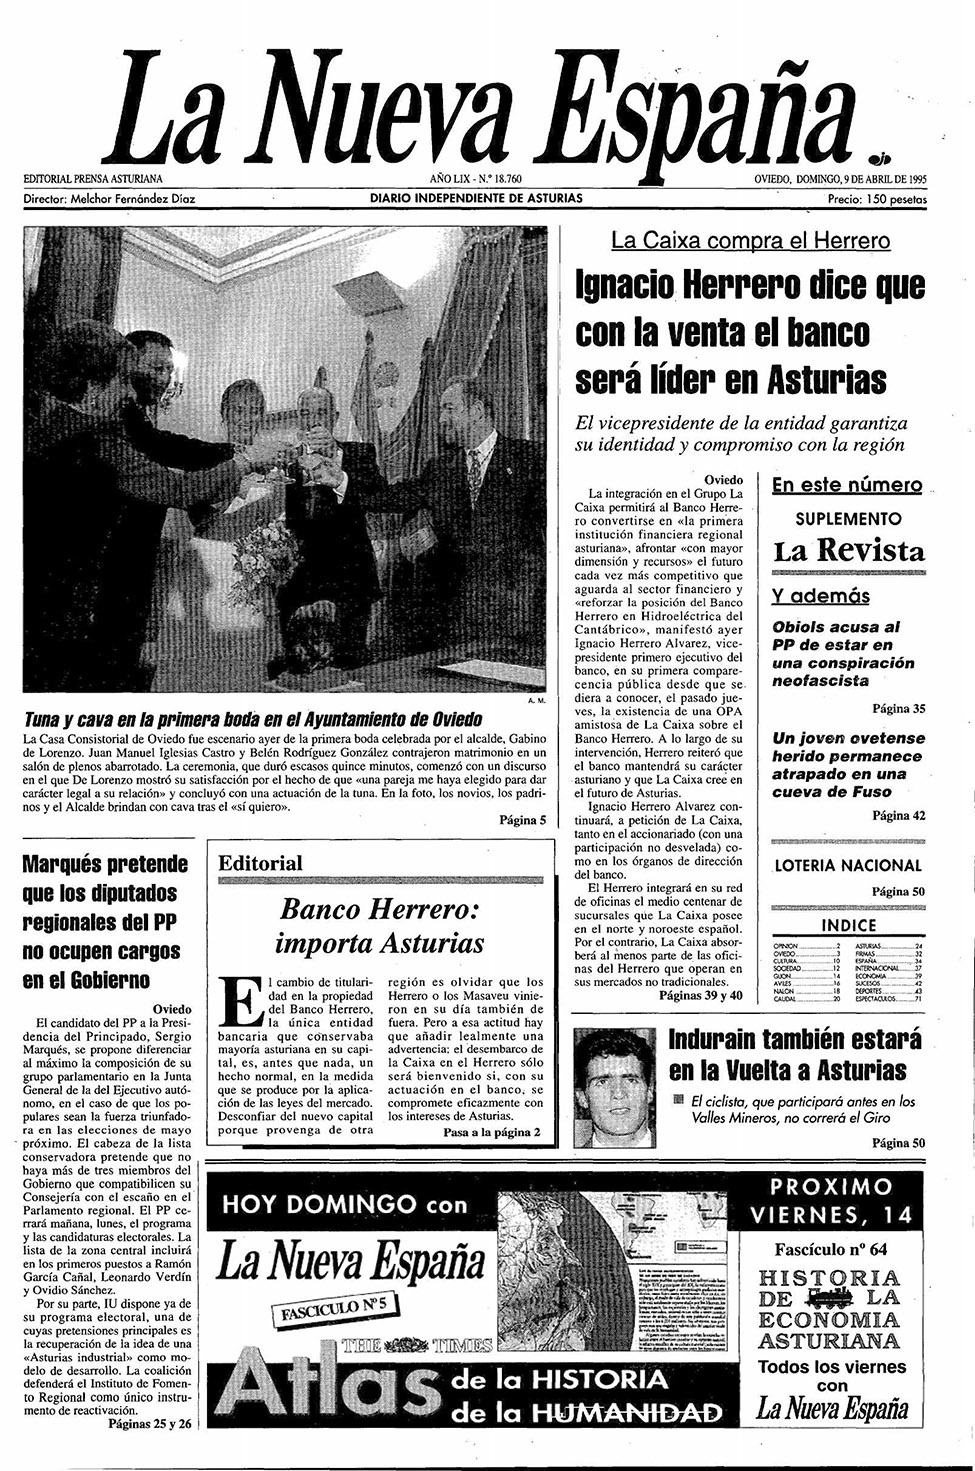 Portada del Domingo, 9 de Abril de 1995